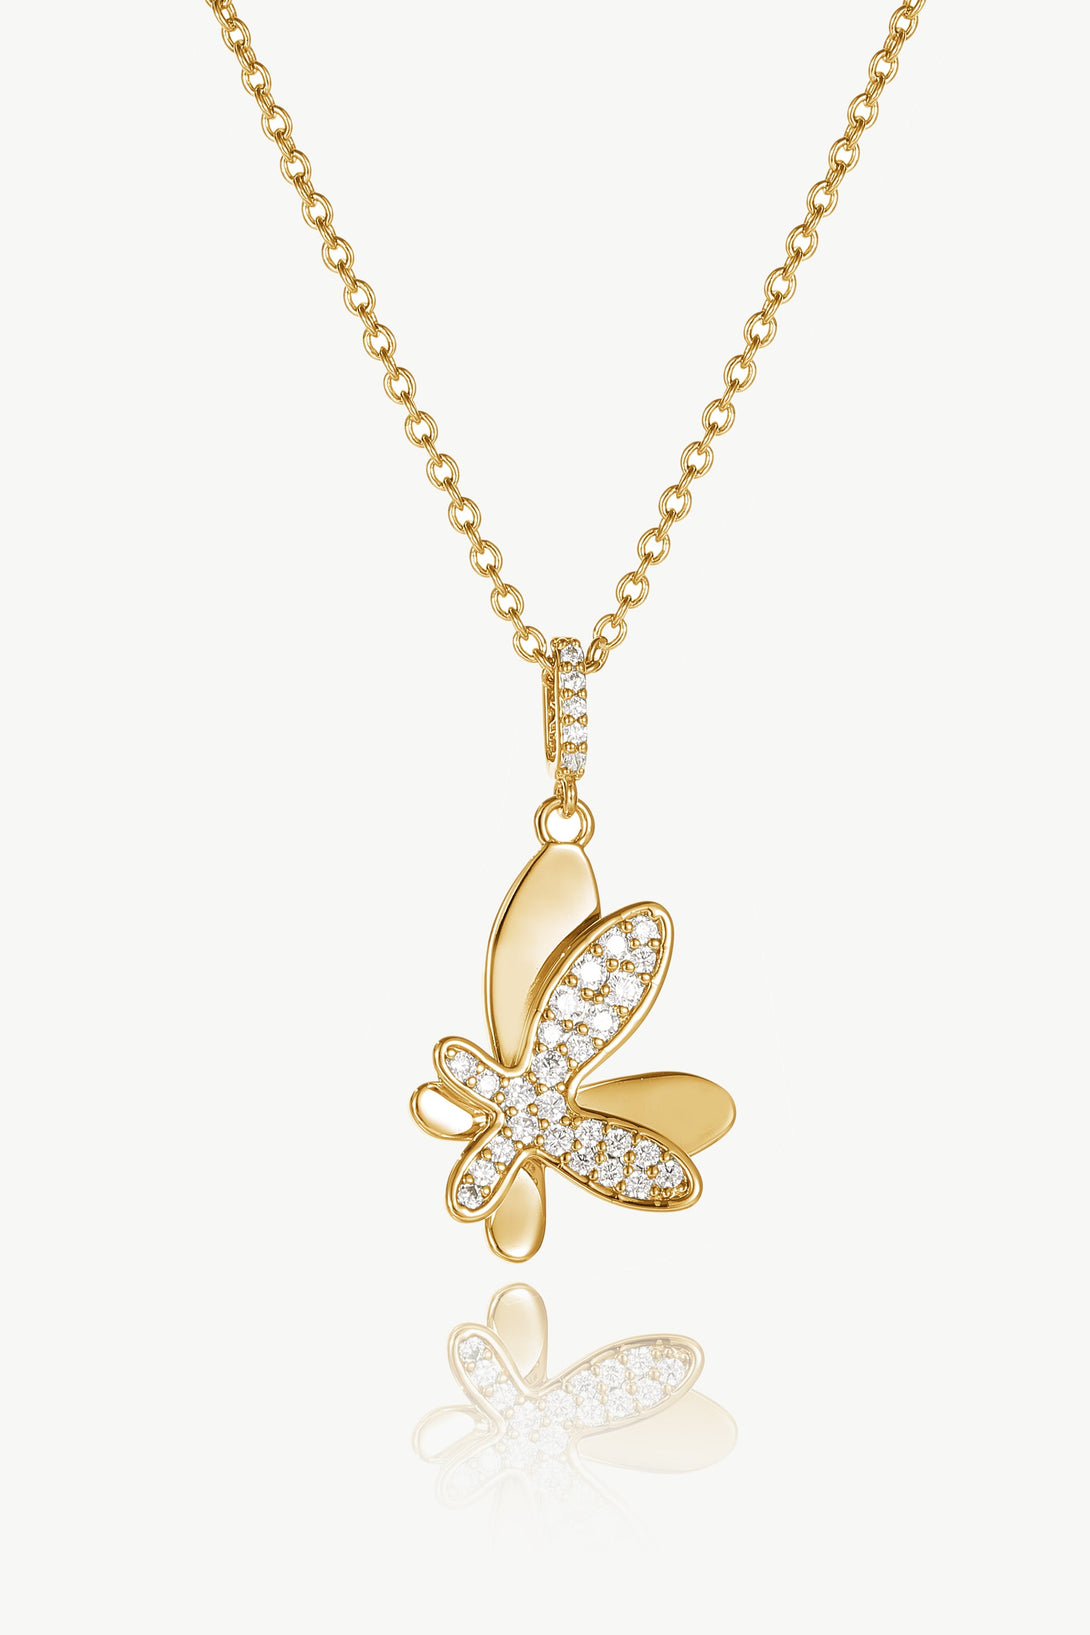 Gold Pavé Diamond Butterfly Pendant Necklace - Classicharms